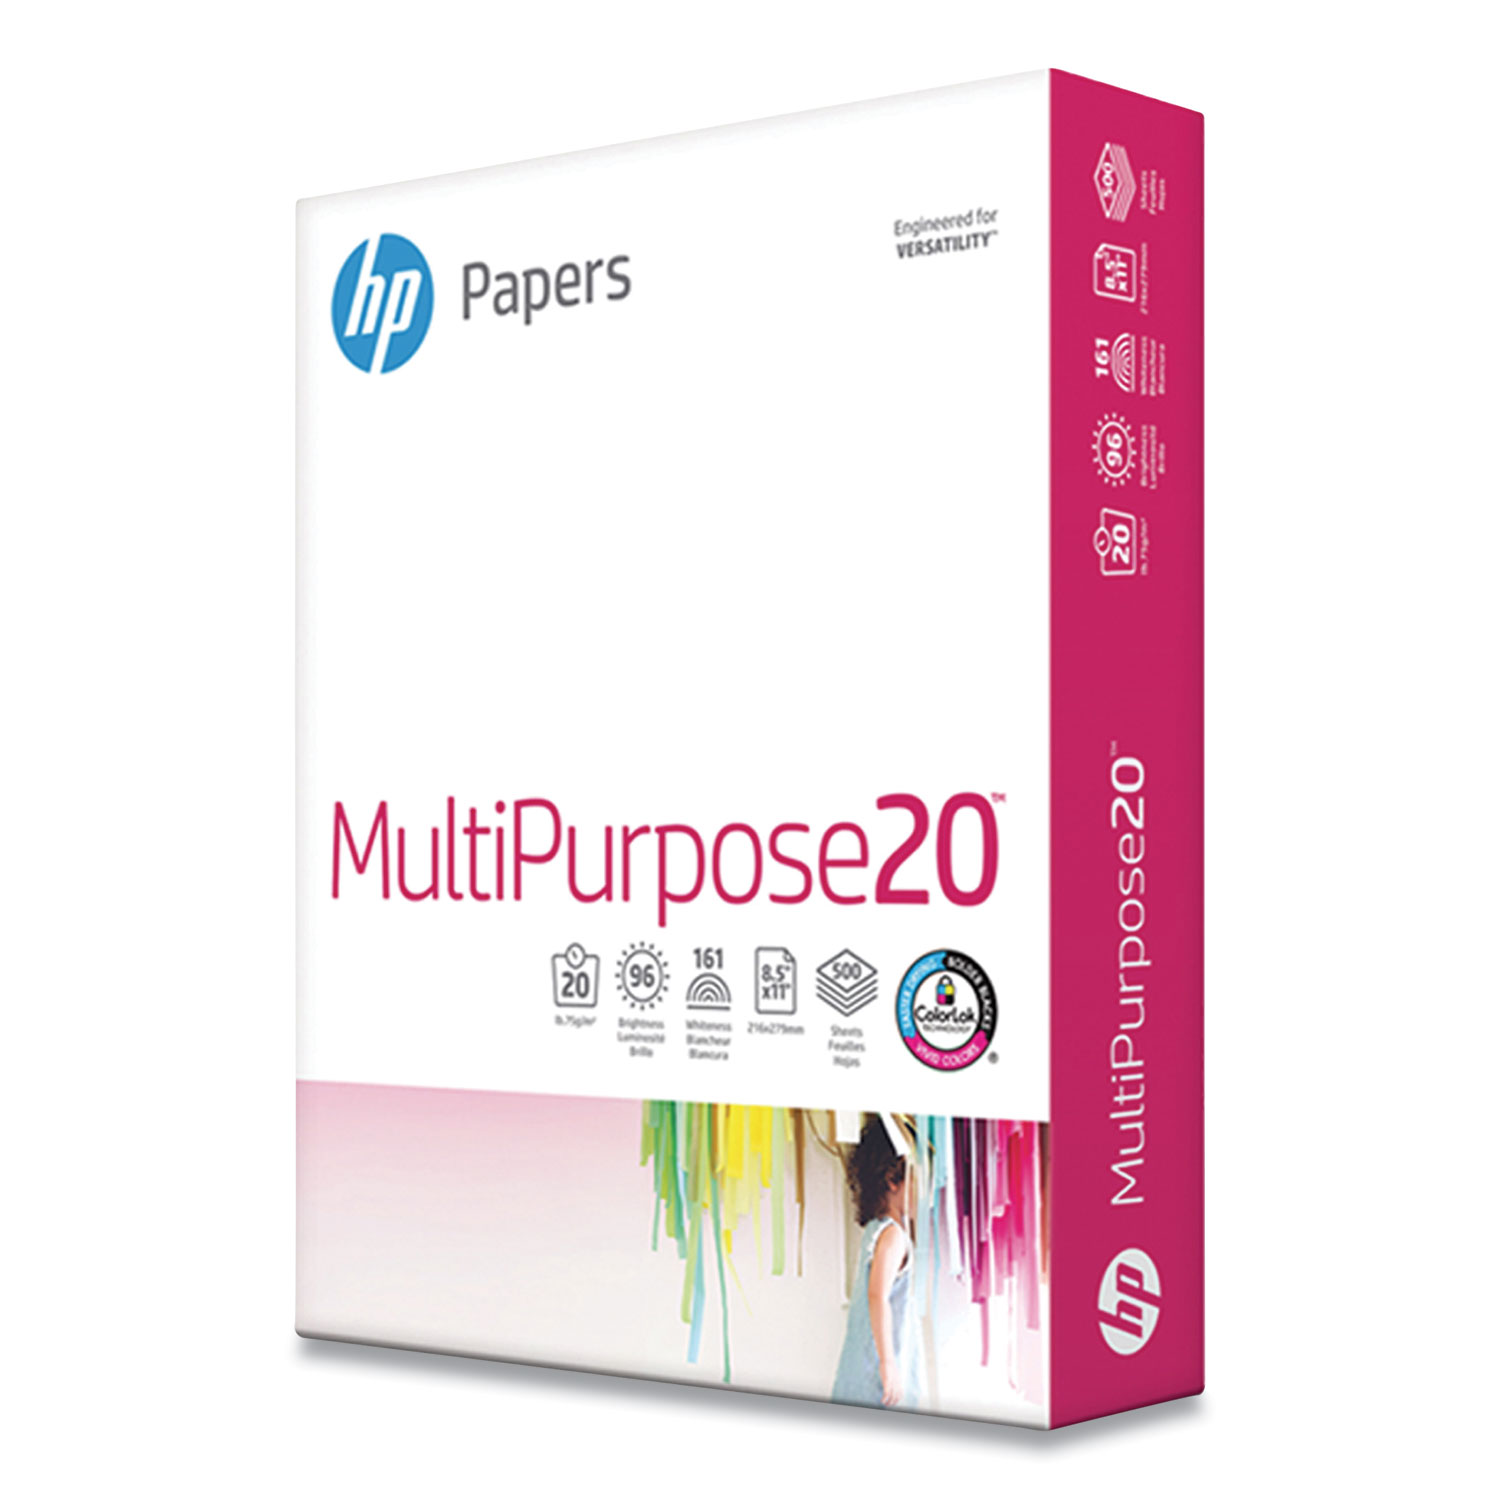 Great Value, Hp Papers Multipurpose20 Paper, 96 Bright, 20 Lb Bond